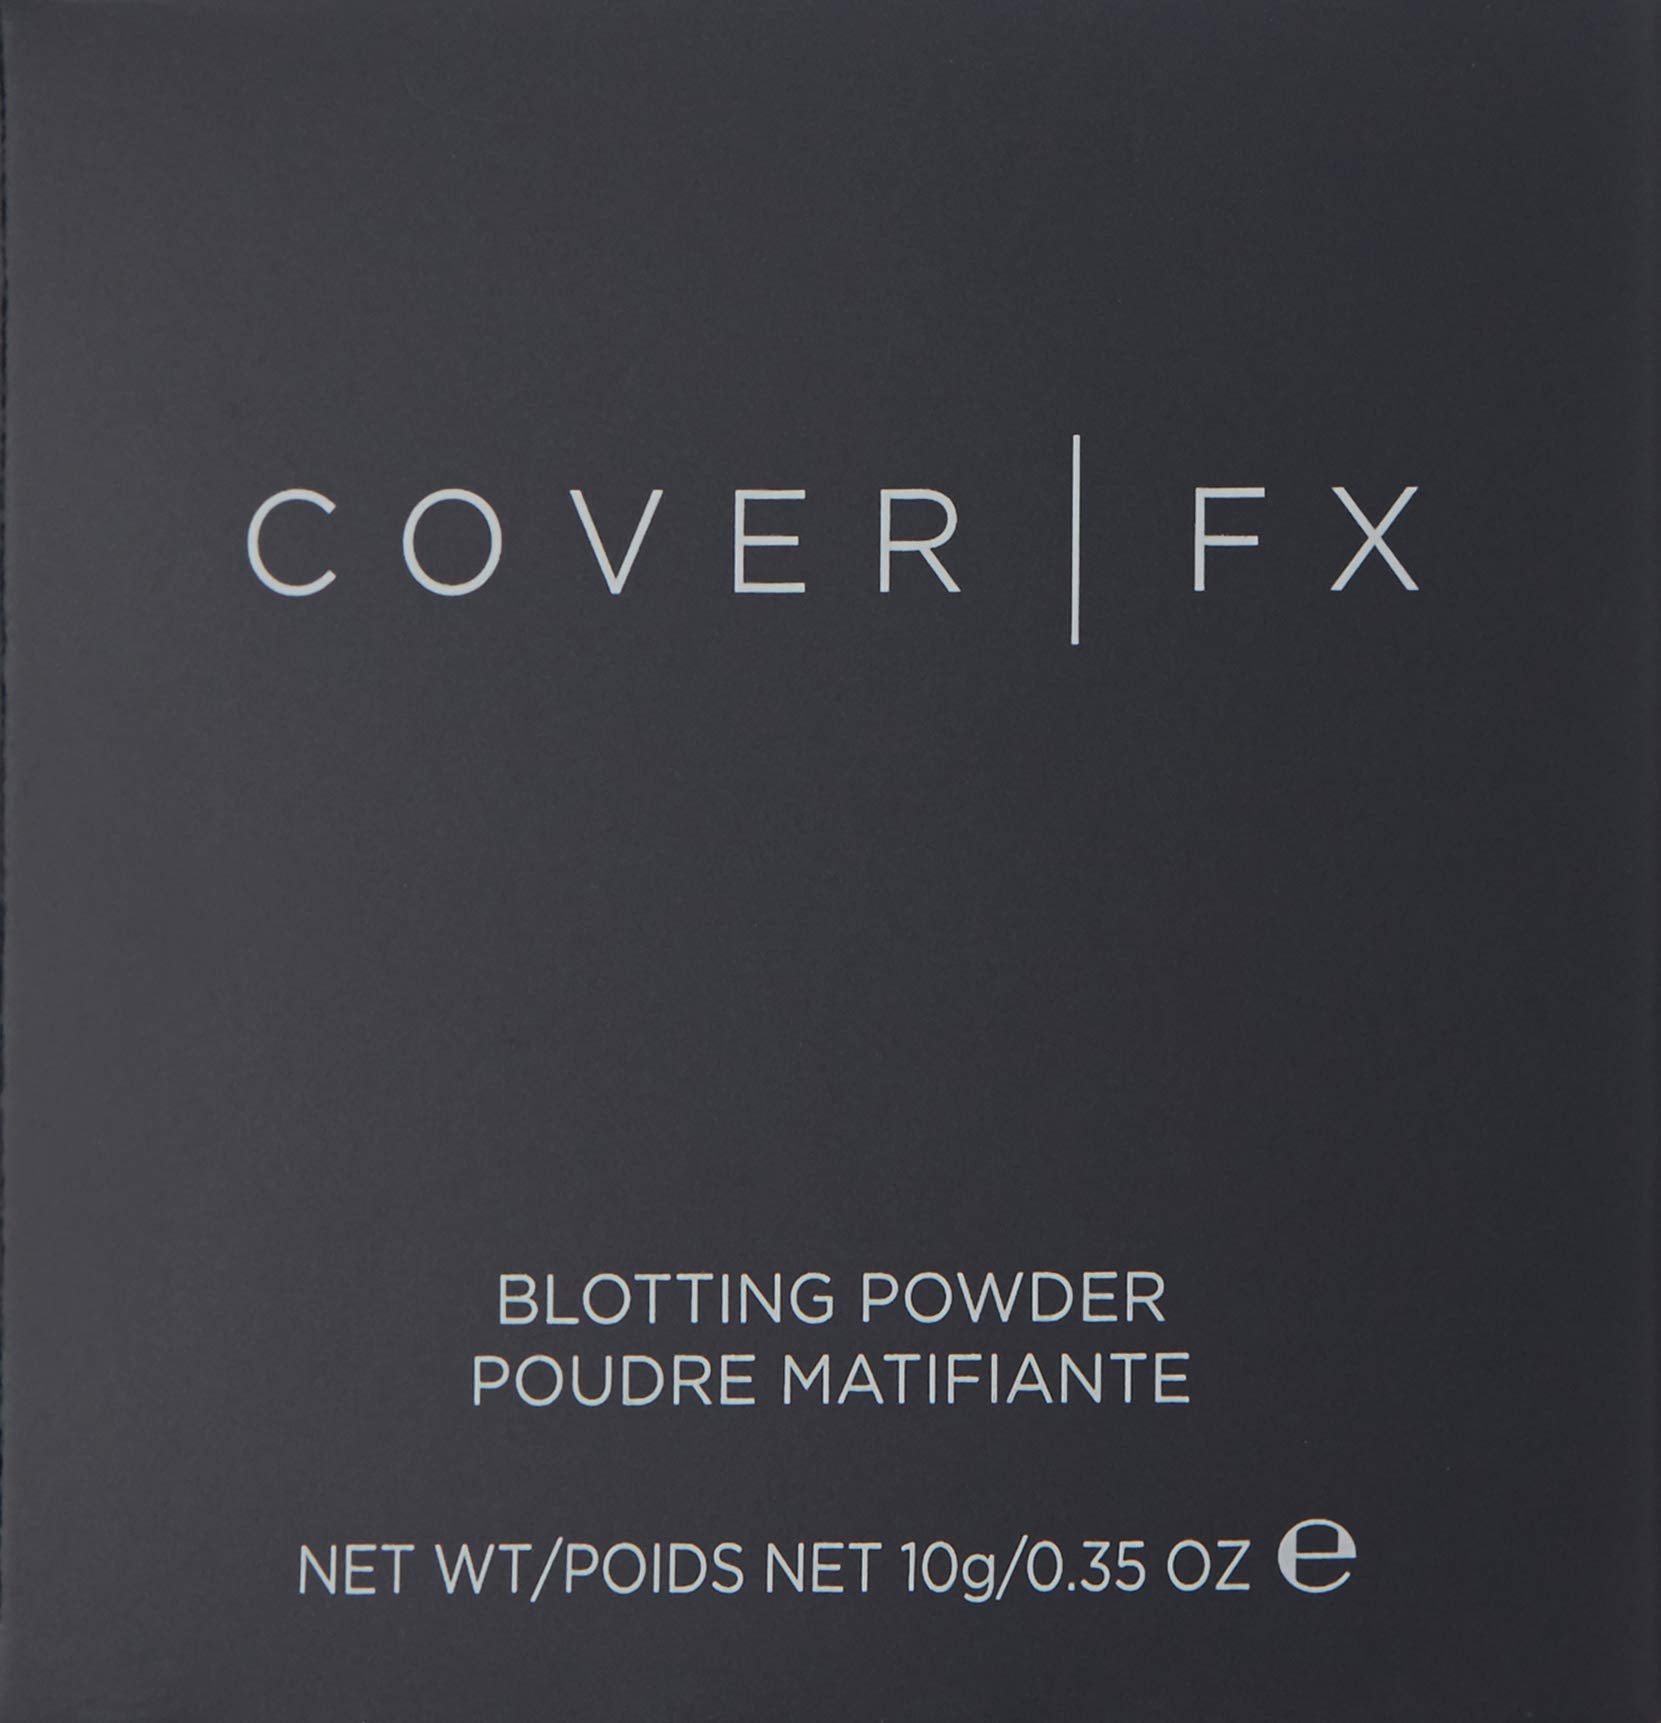 COVER FX Blotting Powder